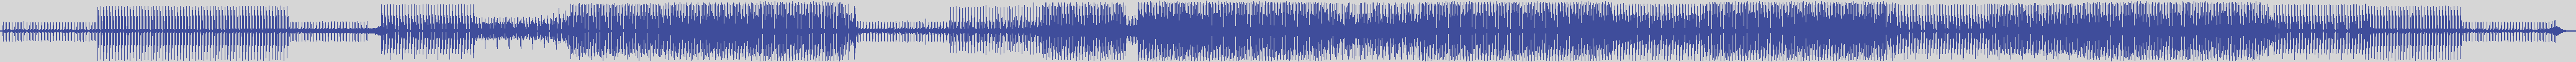 atomic_recordings [AR006] All Ground E.P. - Move Your Body [Orginal Mix] audio wave form